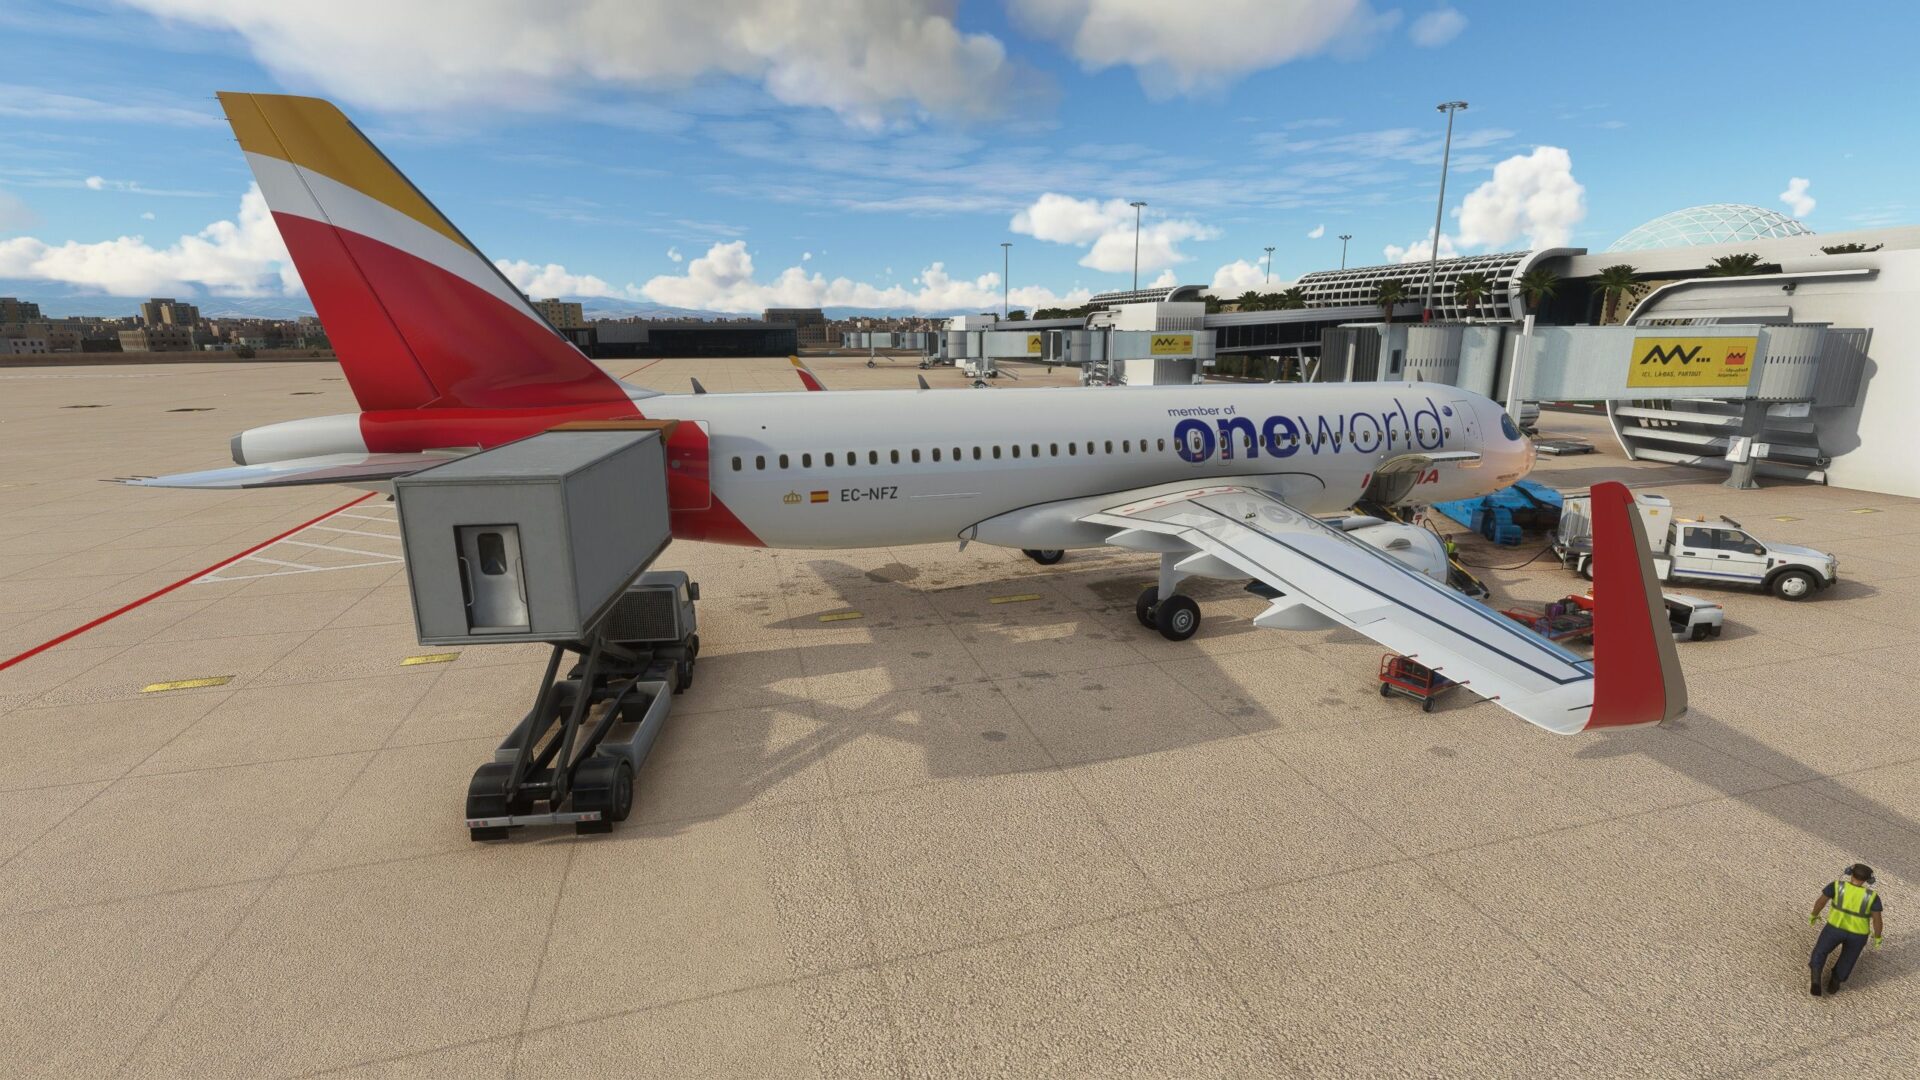 Microsoft Flight Simulator Marrakech Airport Review